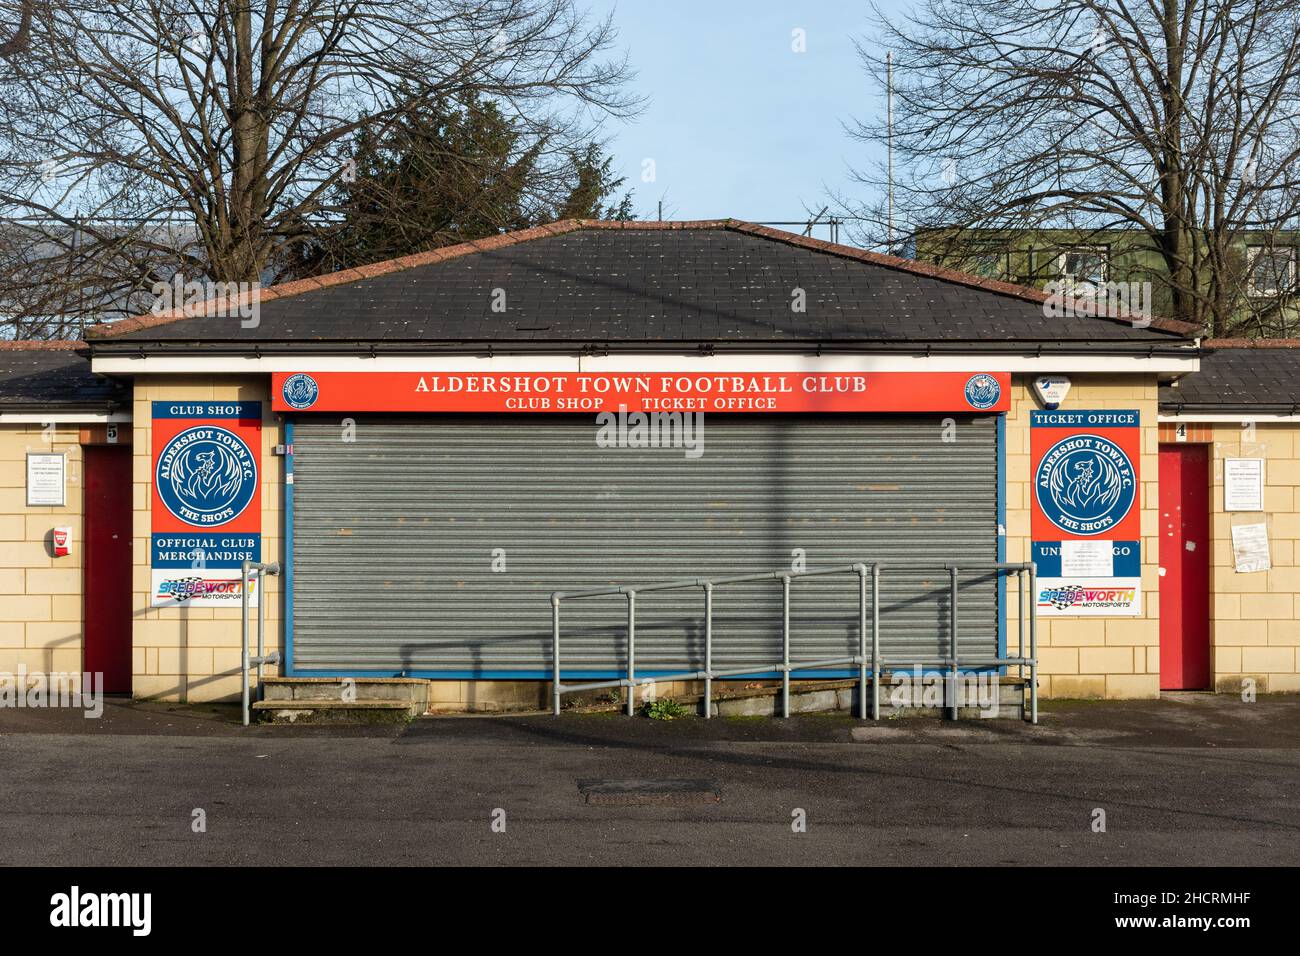 Aldershot Town football Club, le STADE EBB du Hampshire, Angleterre, Royaume-Uni Banque D'Images